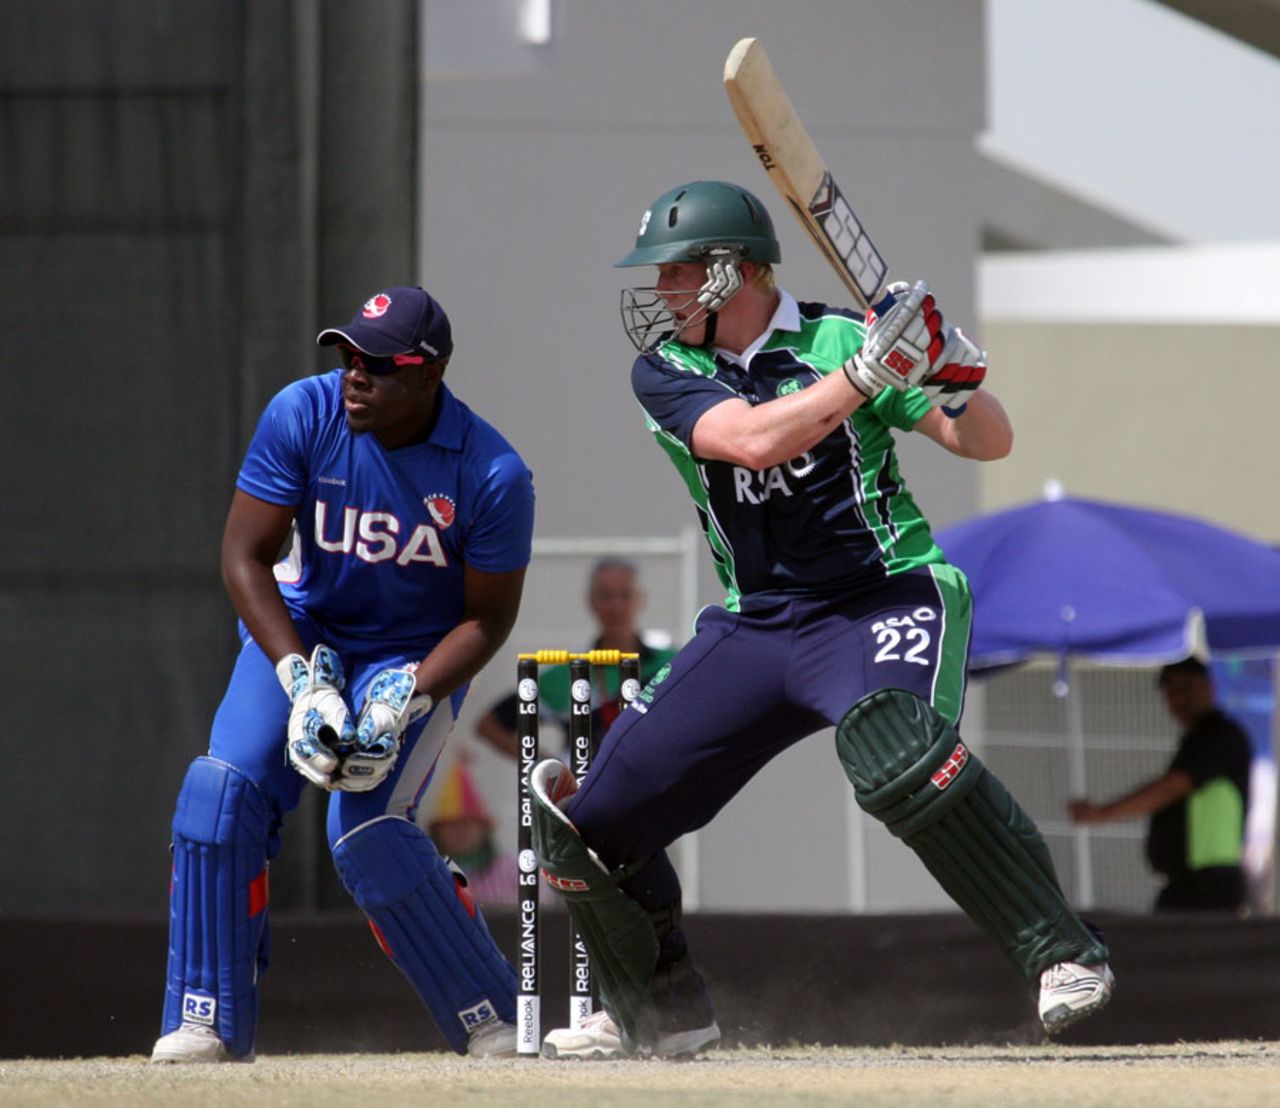 Kevin O'Brien plays a cut shot during his innings, Ireland v USA, ICC World Twenty20 Qualifier, Dubai, March 16, 2012